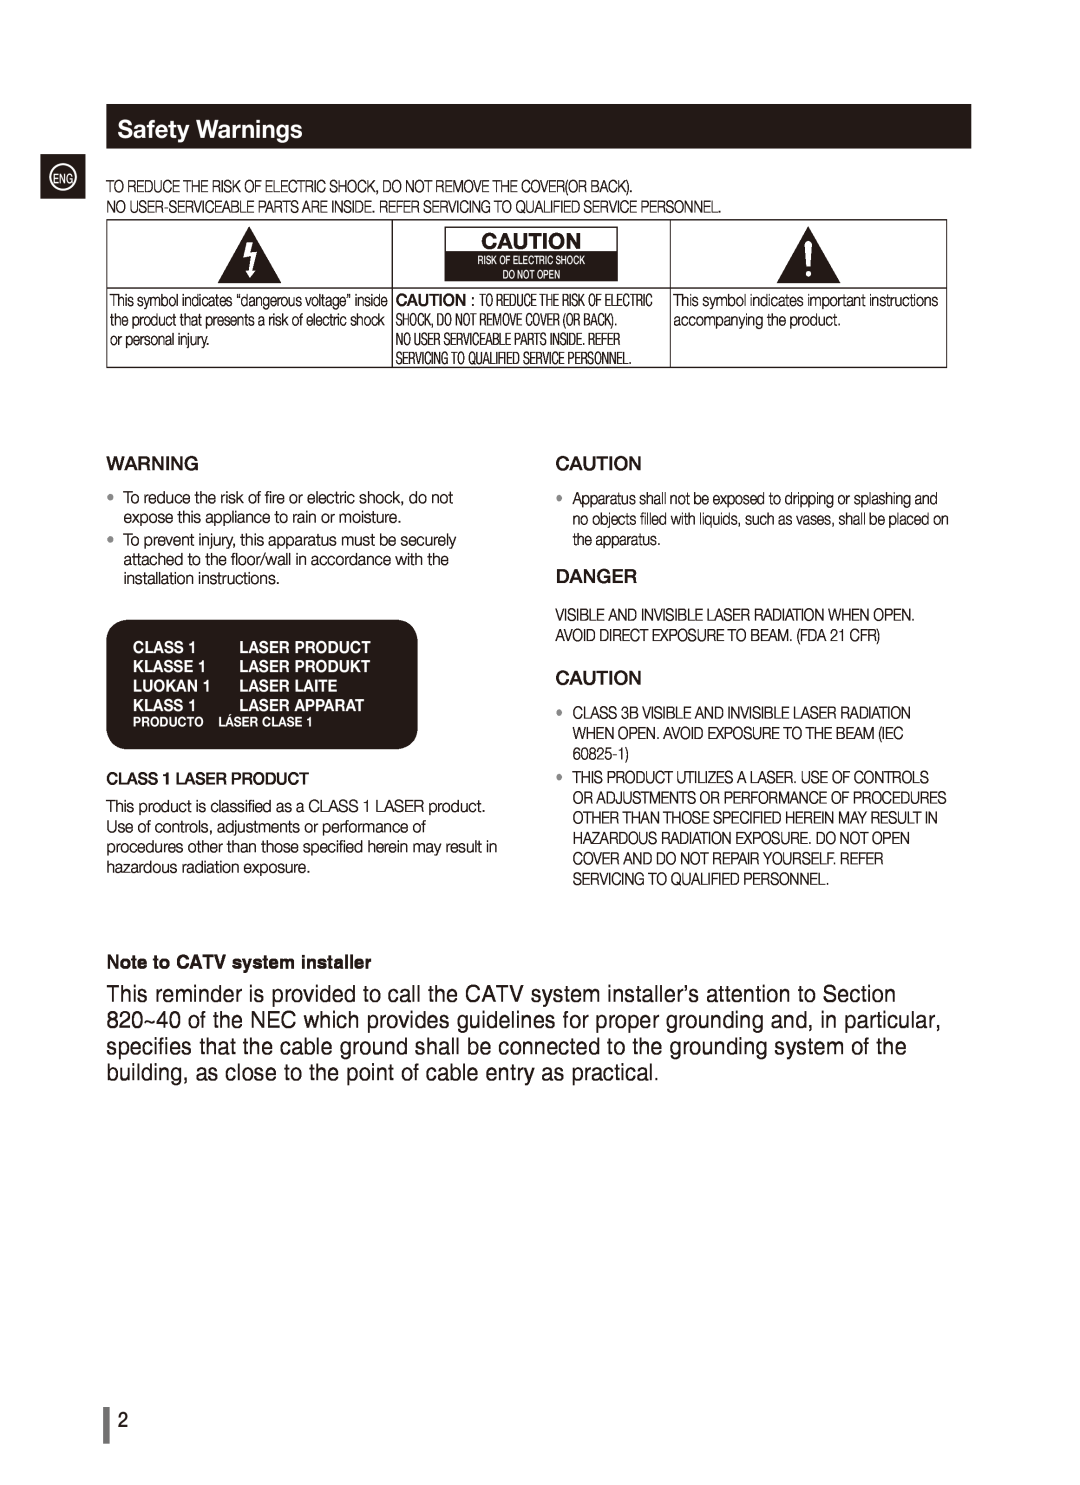 Samsung MX-C850 Safety Warnings, Danger, Note to CATV system installer, CLASS 1 LASER PRODUCT KLASSE 1 LASER PRODUKT 